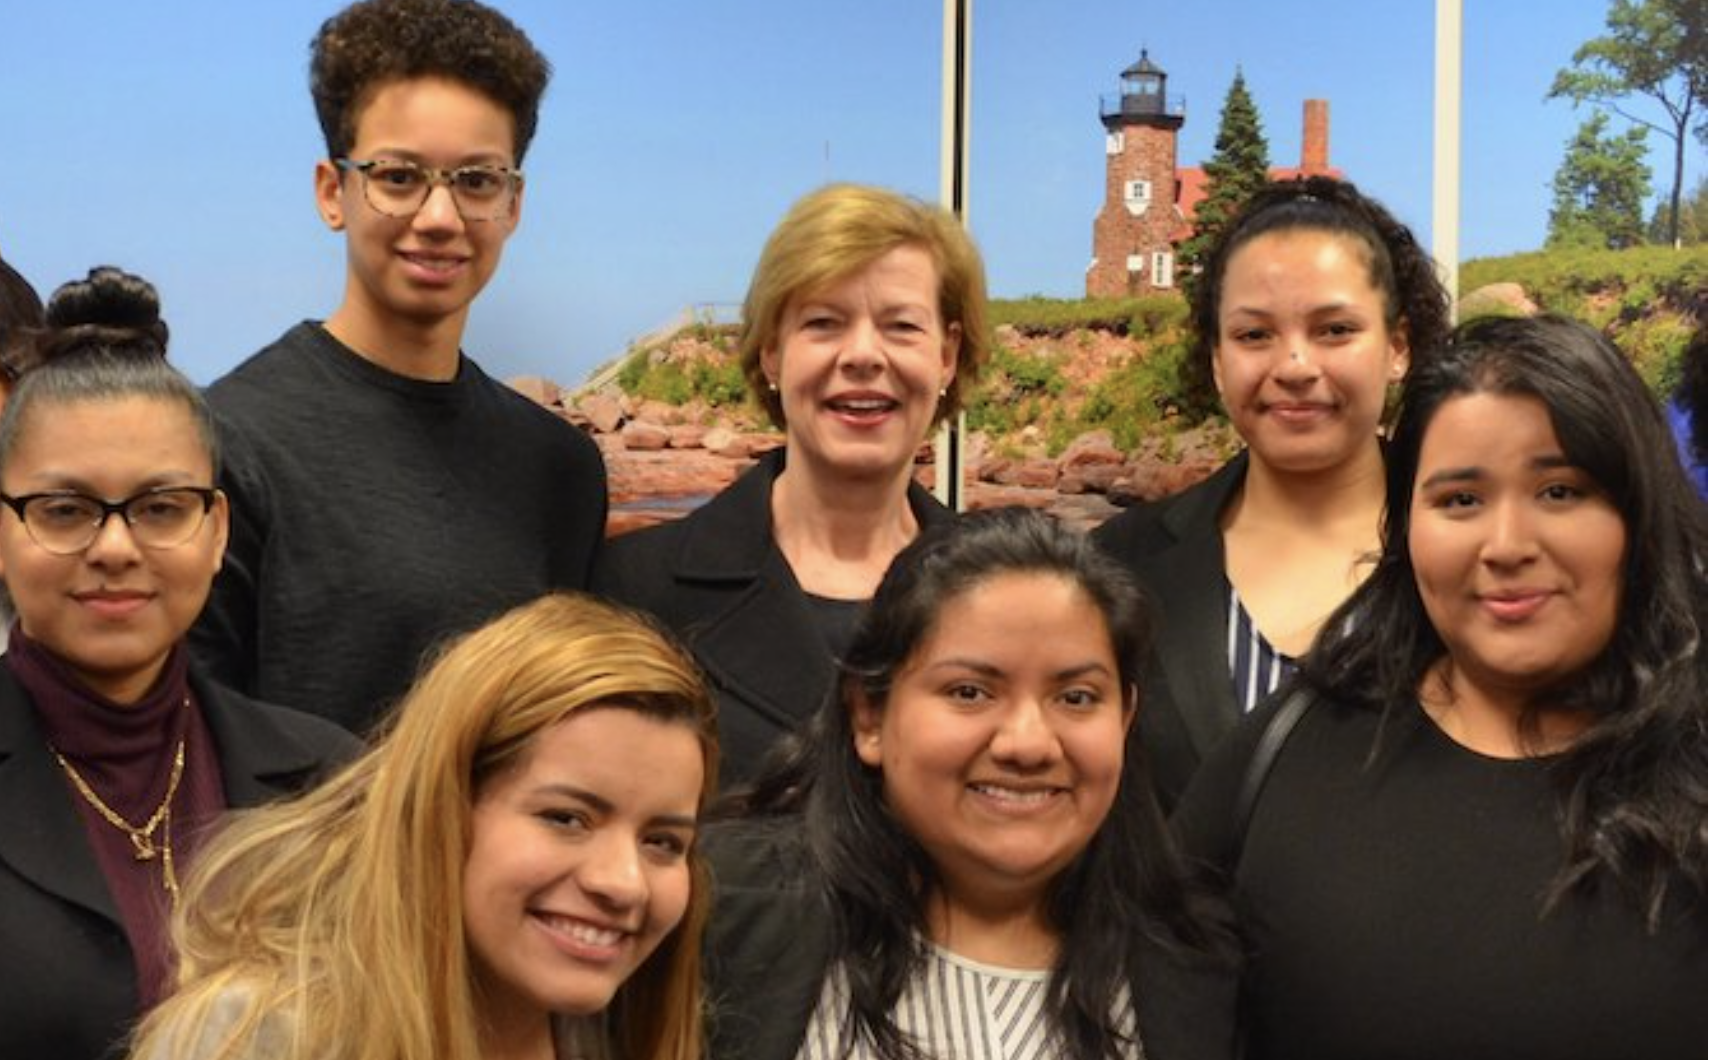 A group of smiling students from Senator Baldwin's summer internship program 